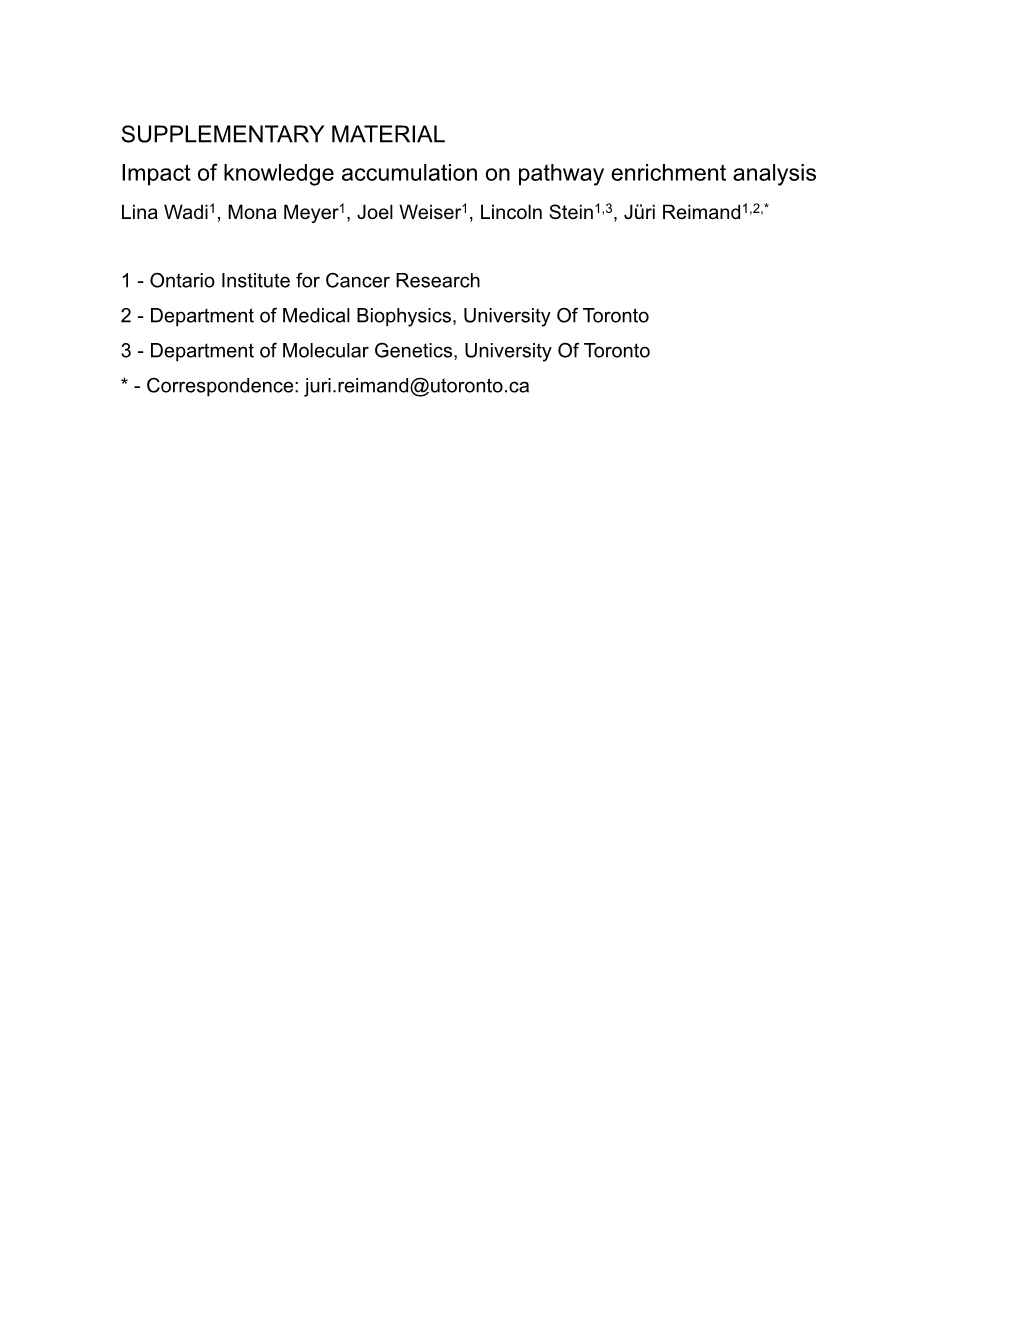 SUPPLEMENTARY MATERIAL Impact of Knowledge Accumulation on Pathway Enrichment Analysis Lina Wadi1, Mona Meyer1, Joel Weiser1, Lincoln Stein1,3, Jüri Reimand1,2,*